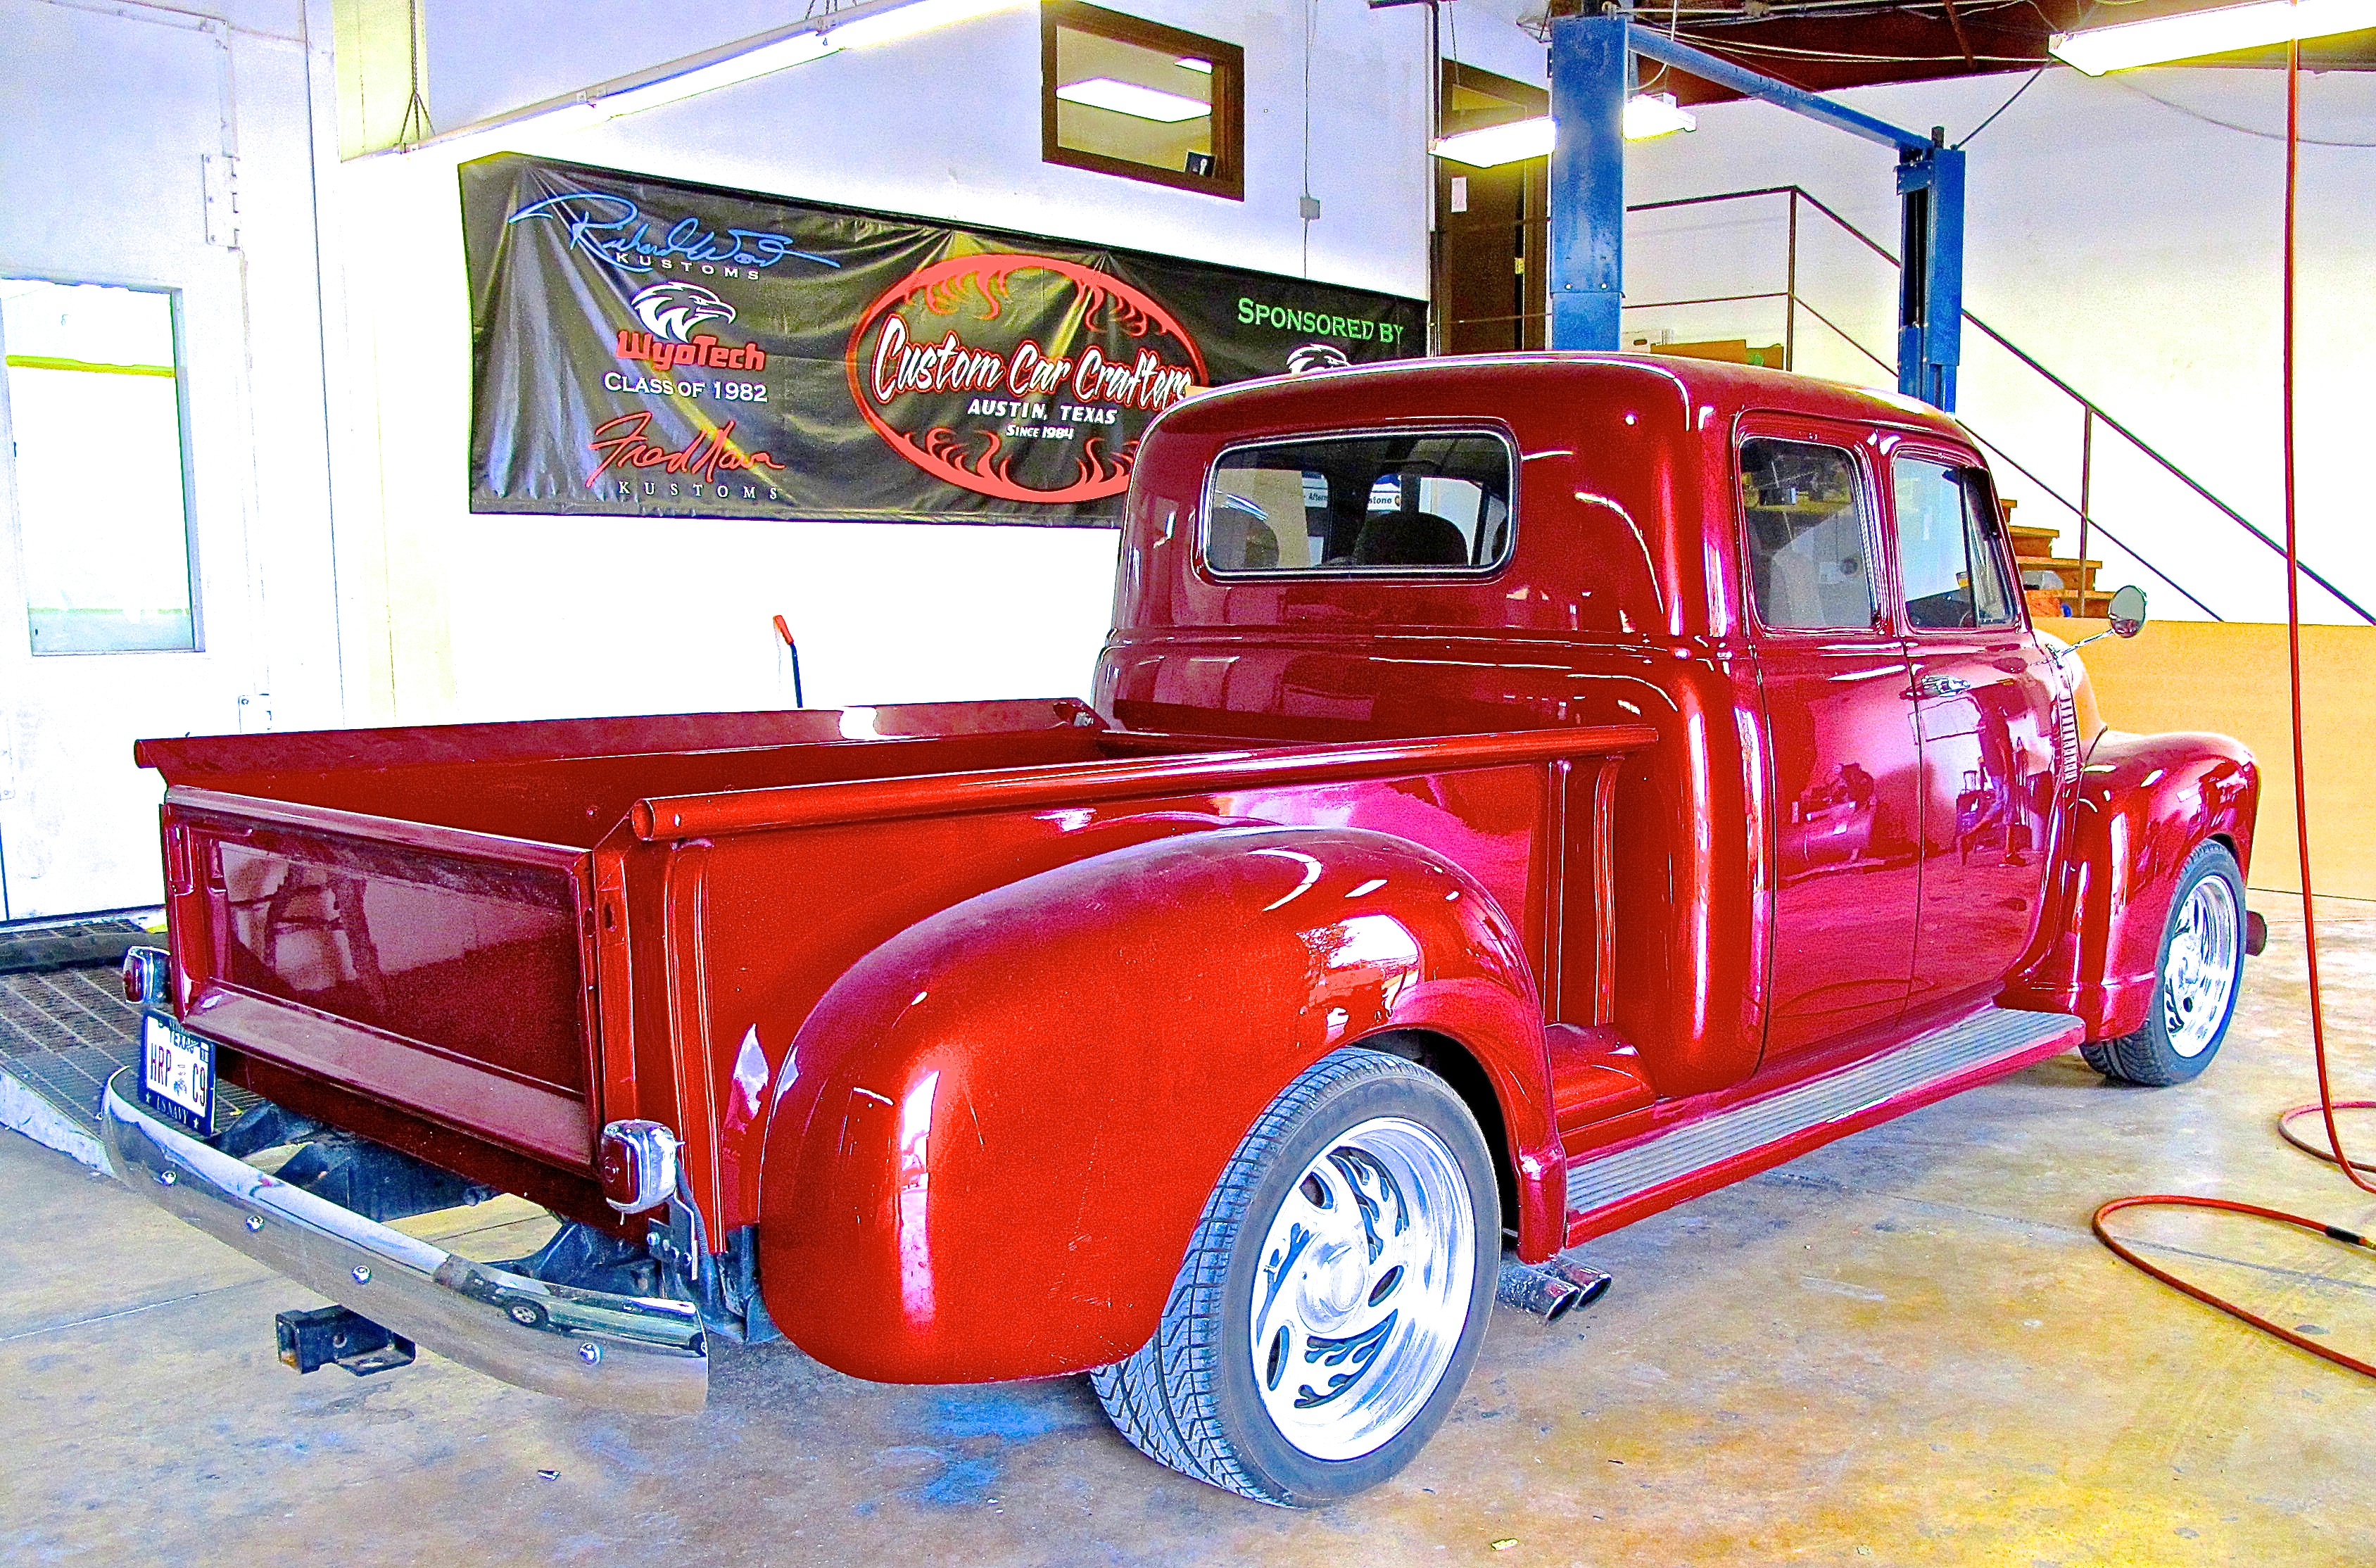 Chevrolet Custom Crewcab truck at Custom Car Crafters Austin Texas